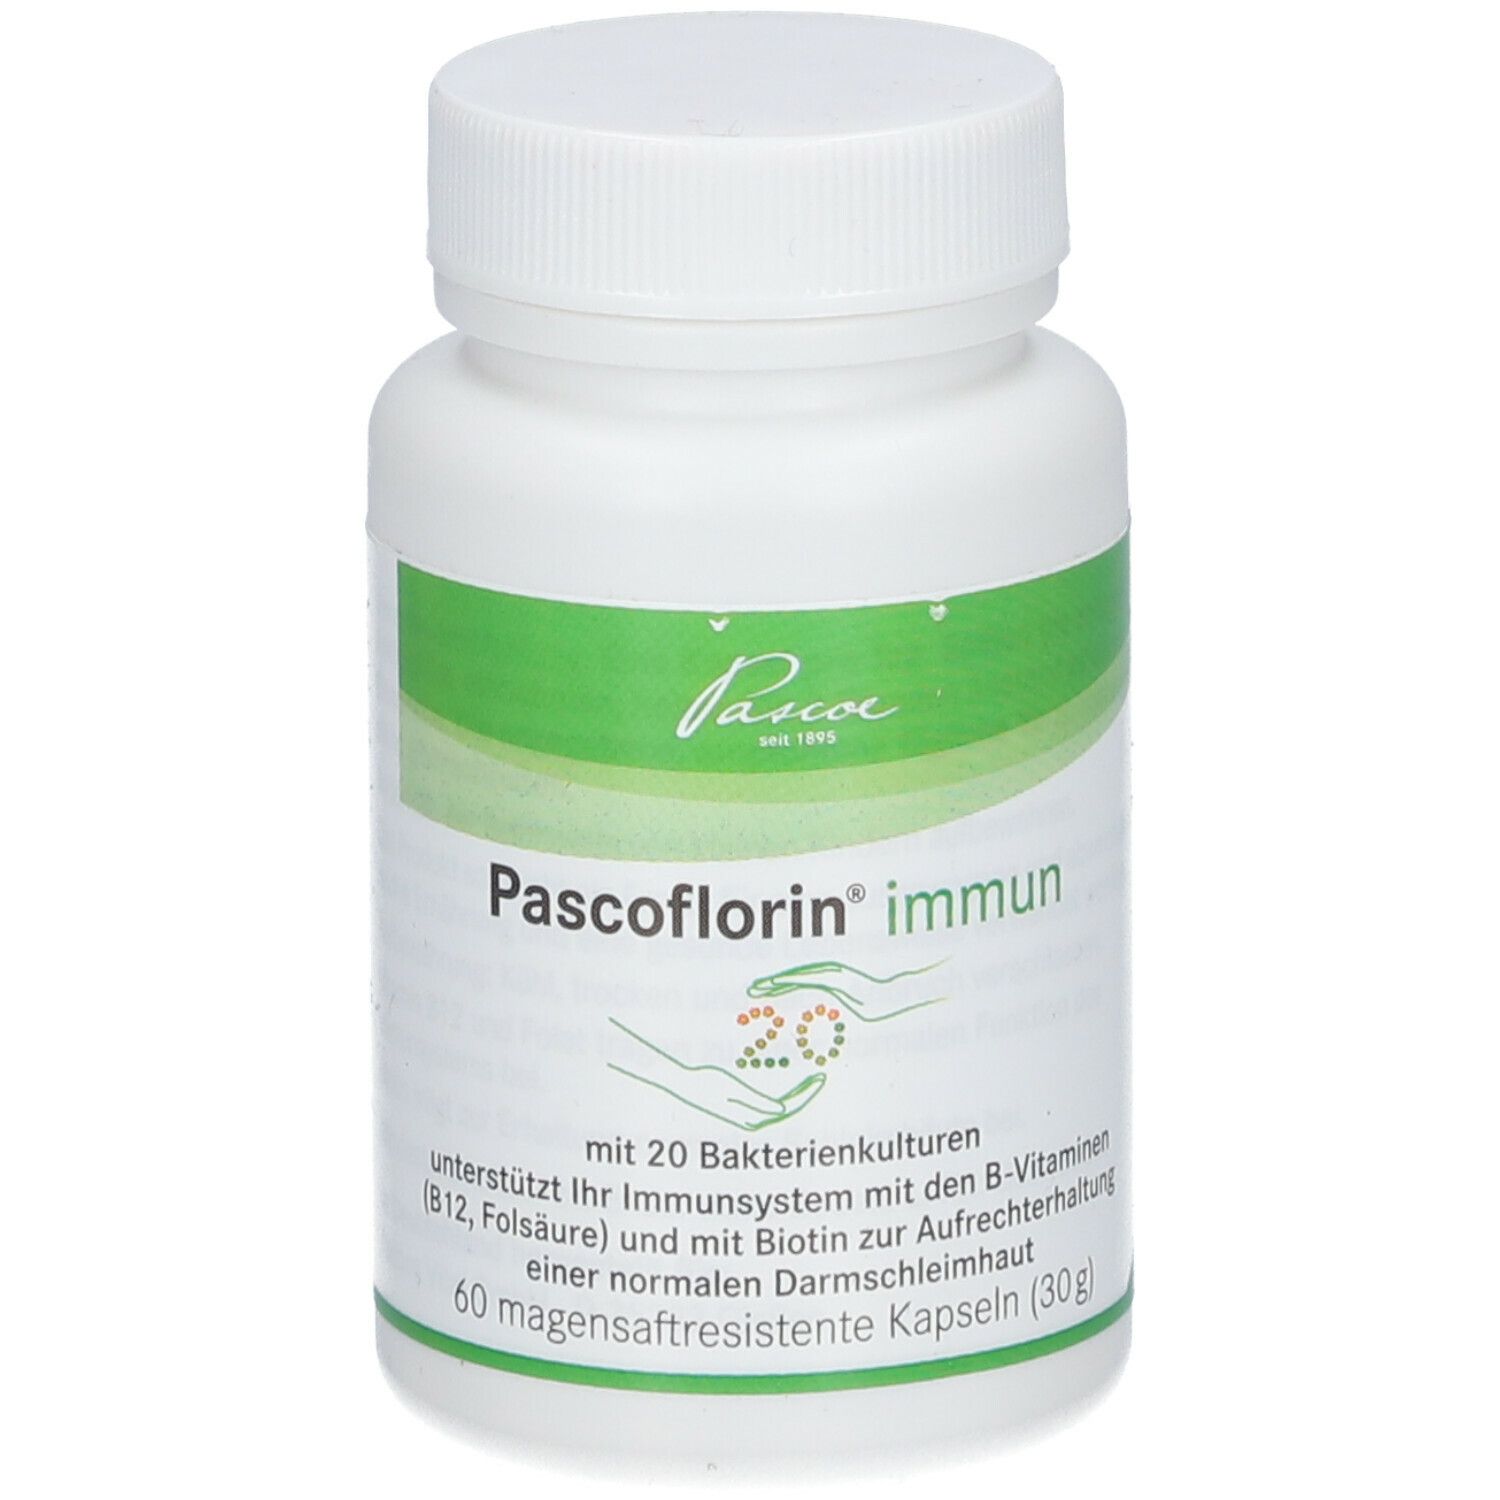 Image of Pascoflorin® immun